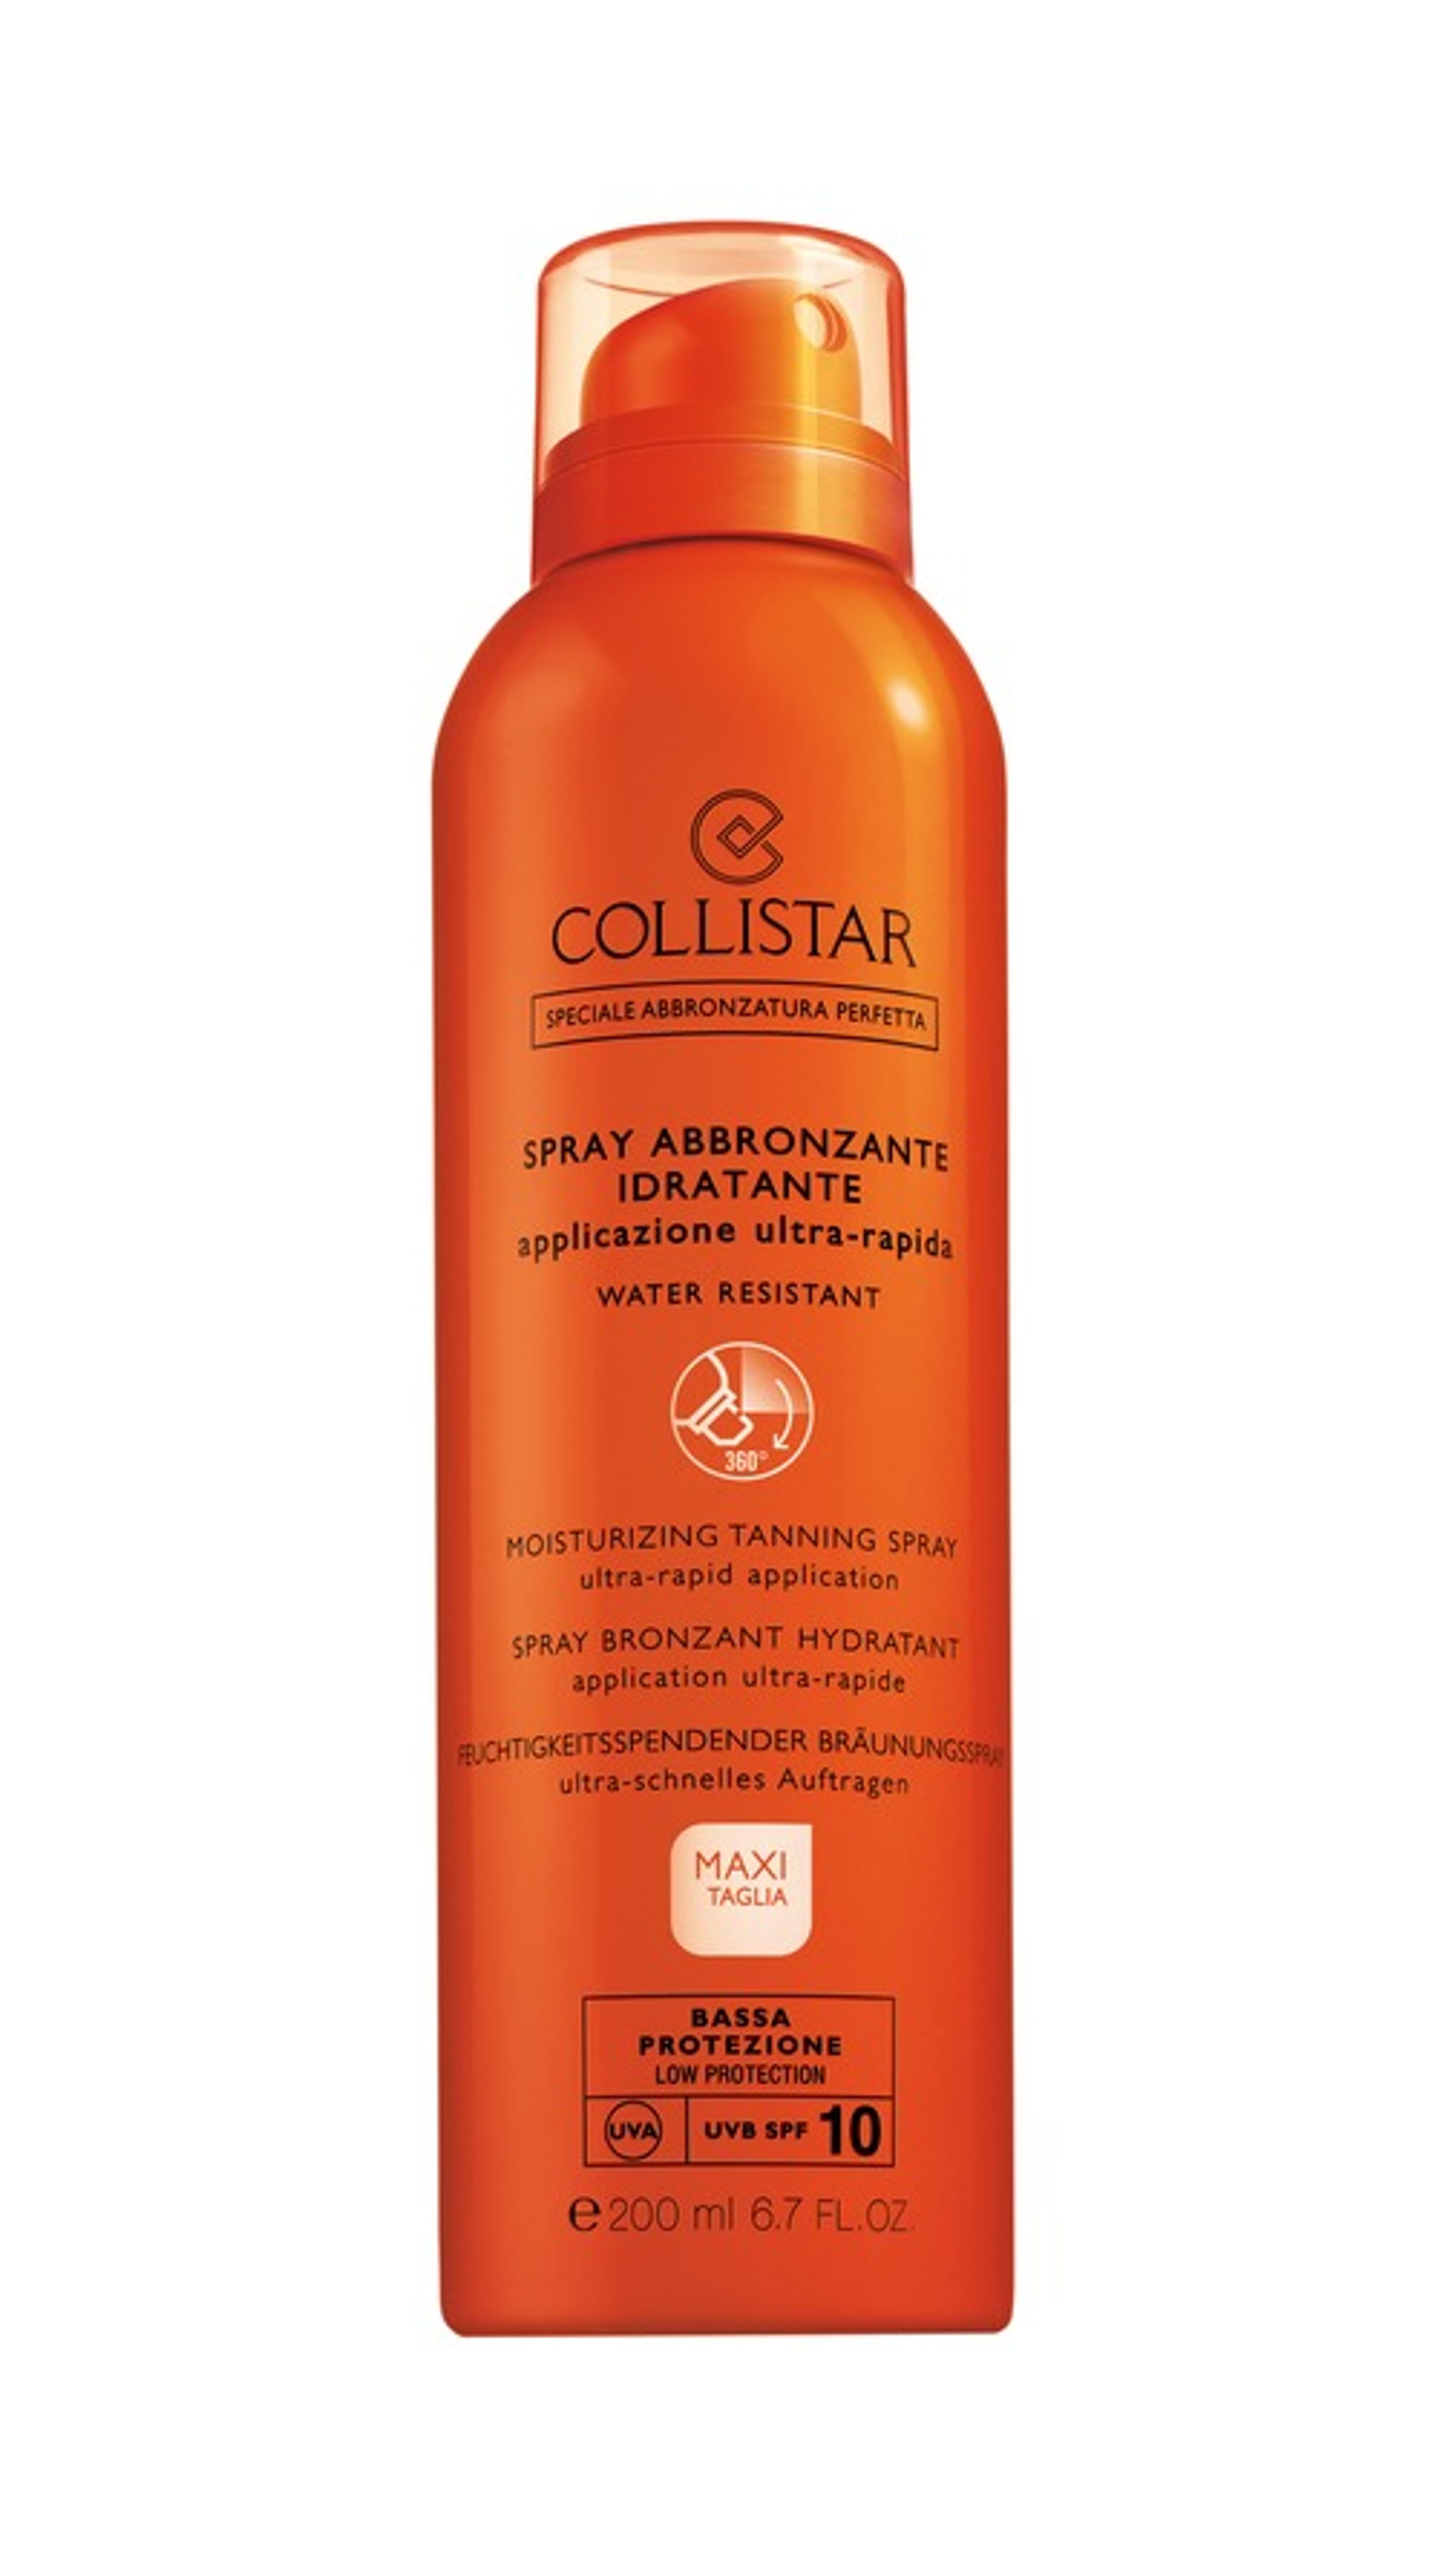 Collistar Spray Abbronzante Idratante Spf10 1